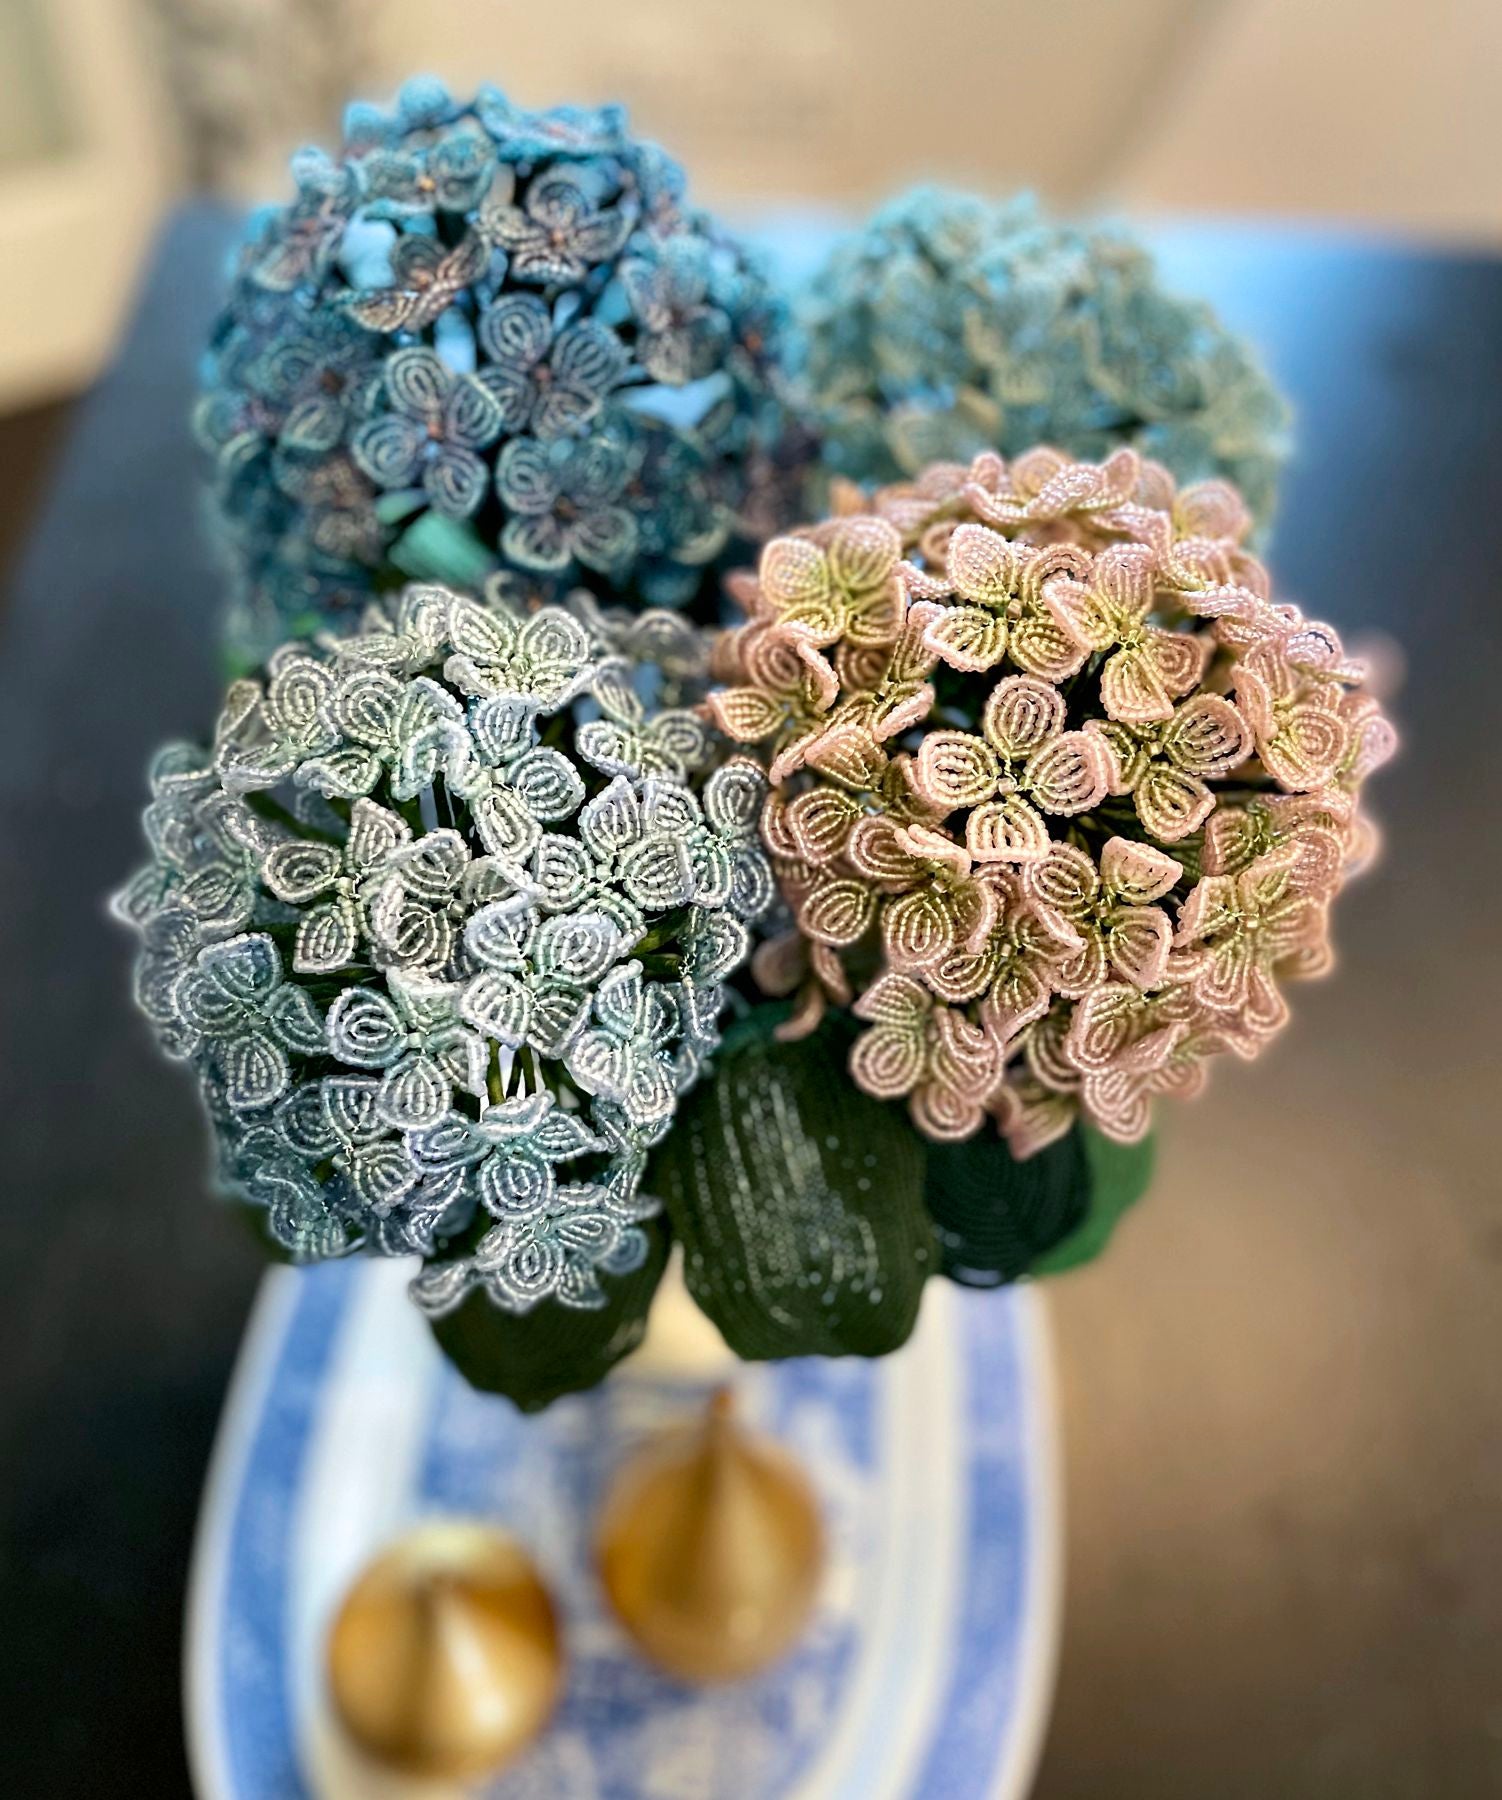 Blue Violet Hydrangeas